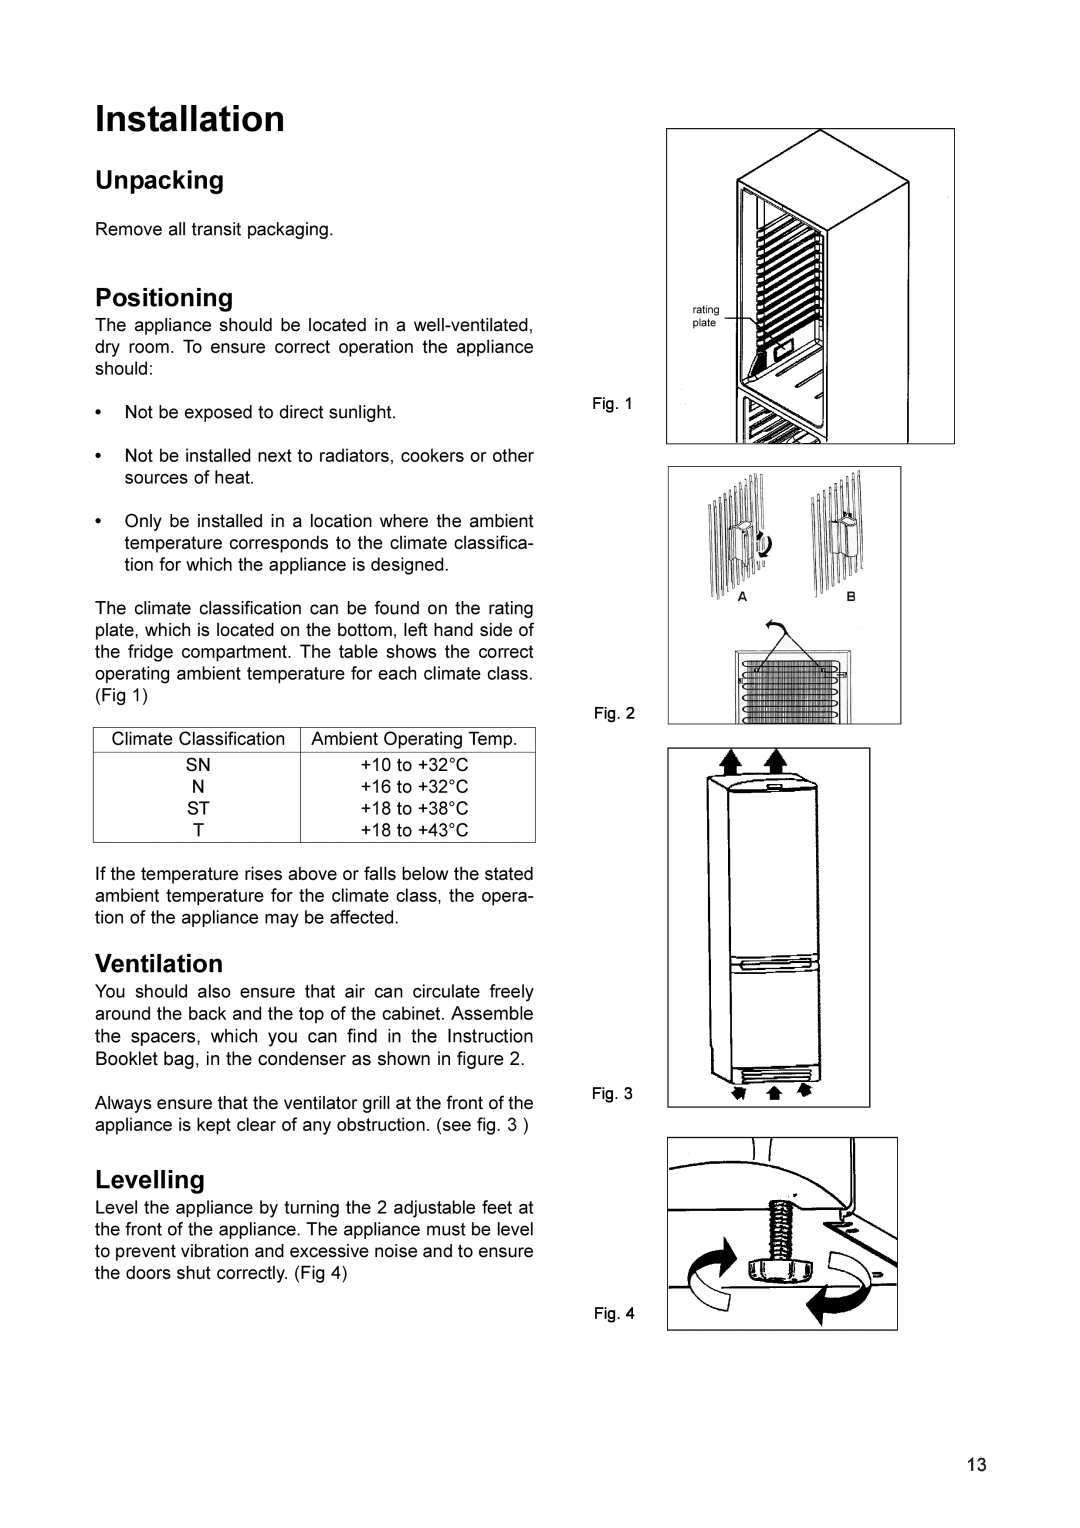 John Lewis JLFFS2002 manual Installation, Unpacking, Positioning, Ventilation, Levelling 